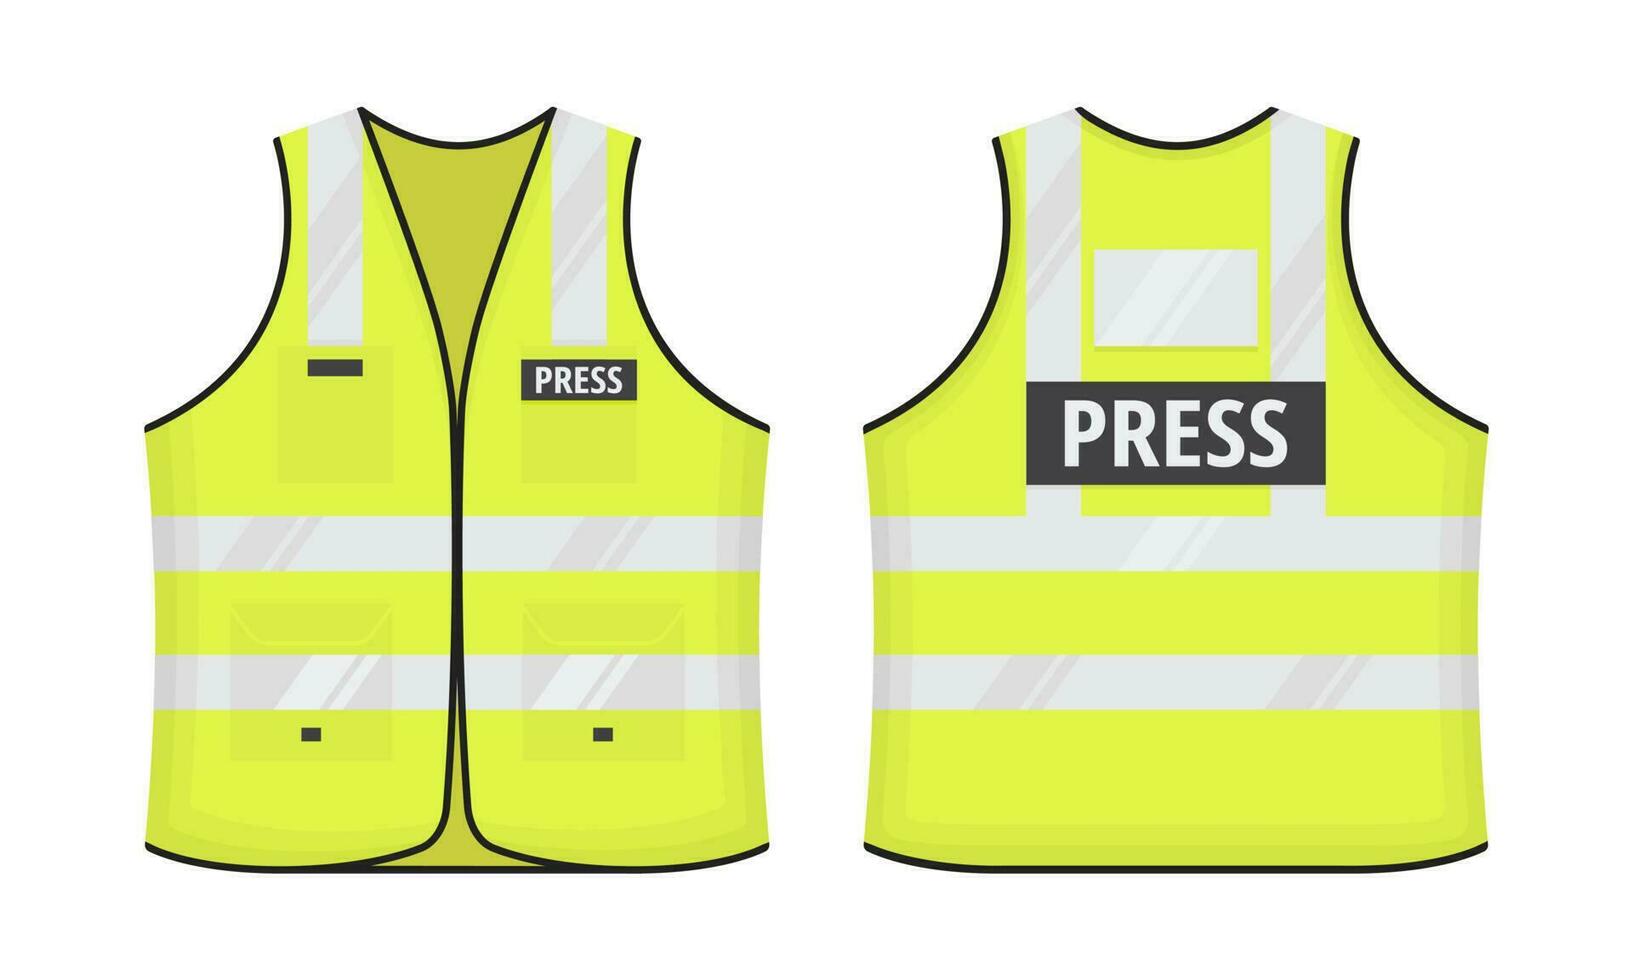 Safety reflective vest with label PRESS tag flat style design vector illustration set.